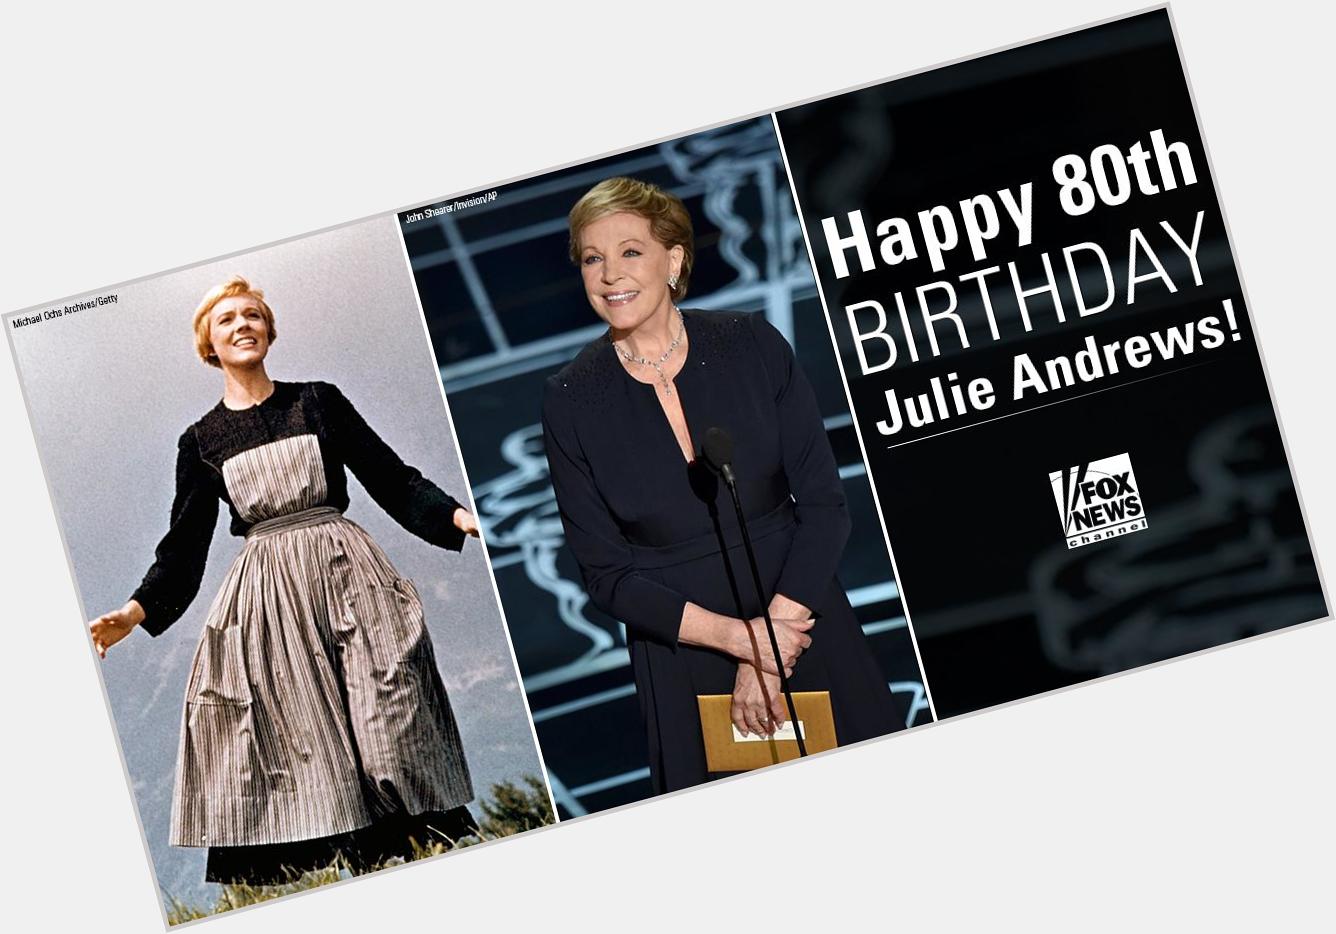  Happy 80th birthday, Julie Andrews! 